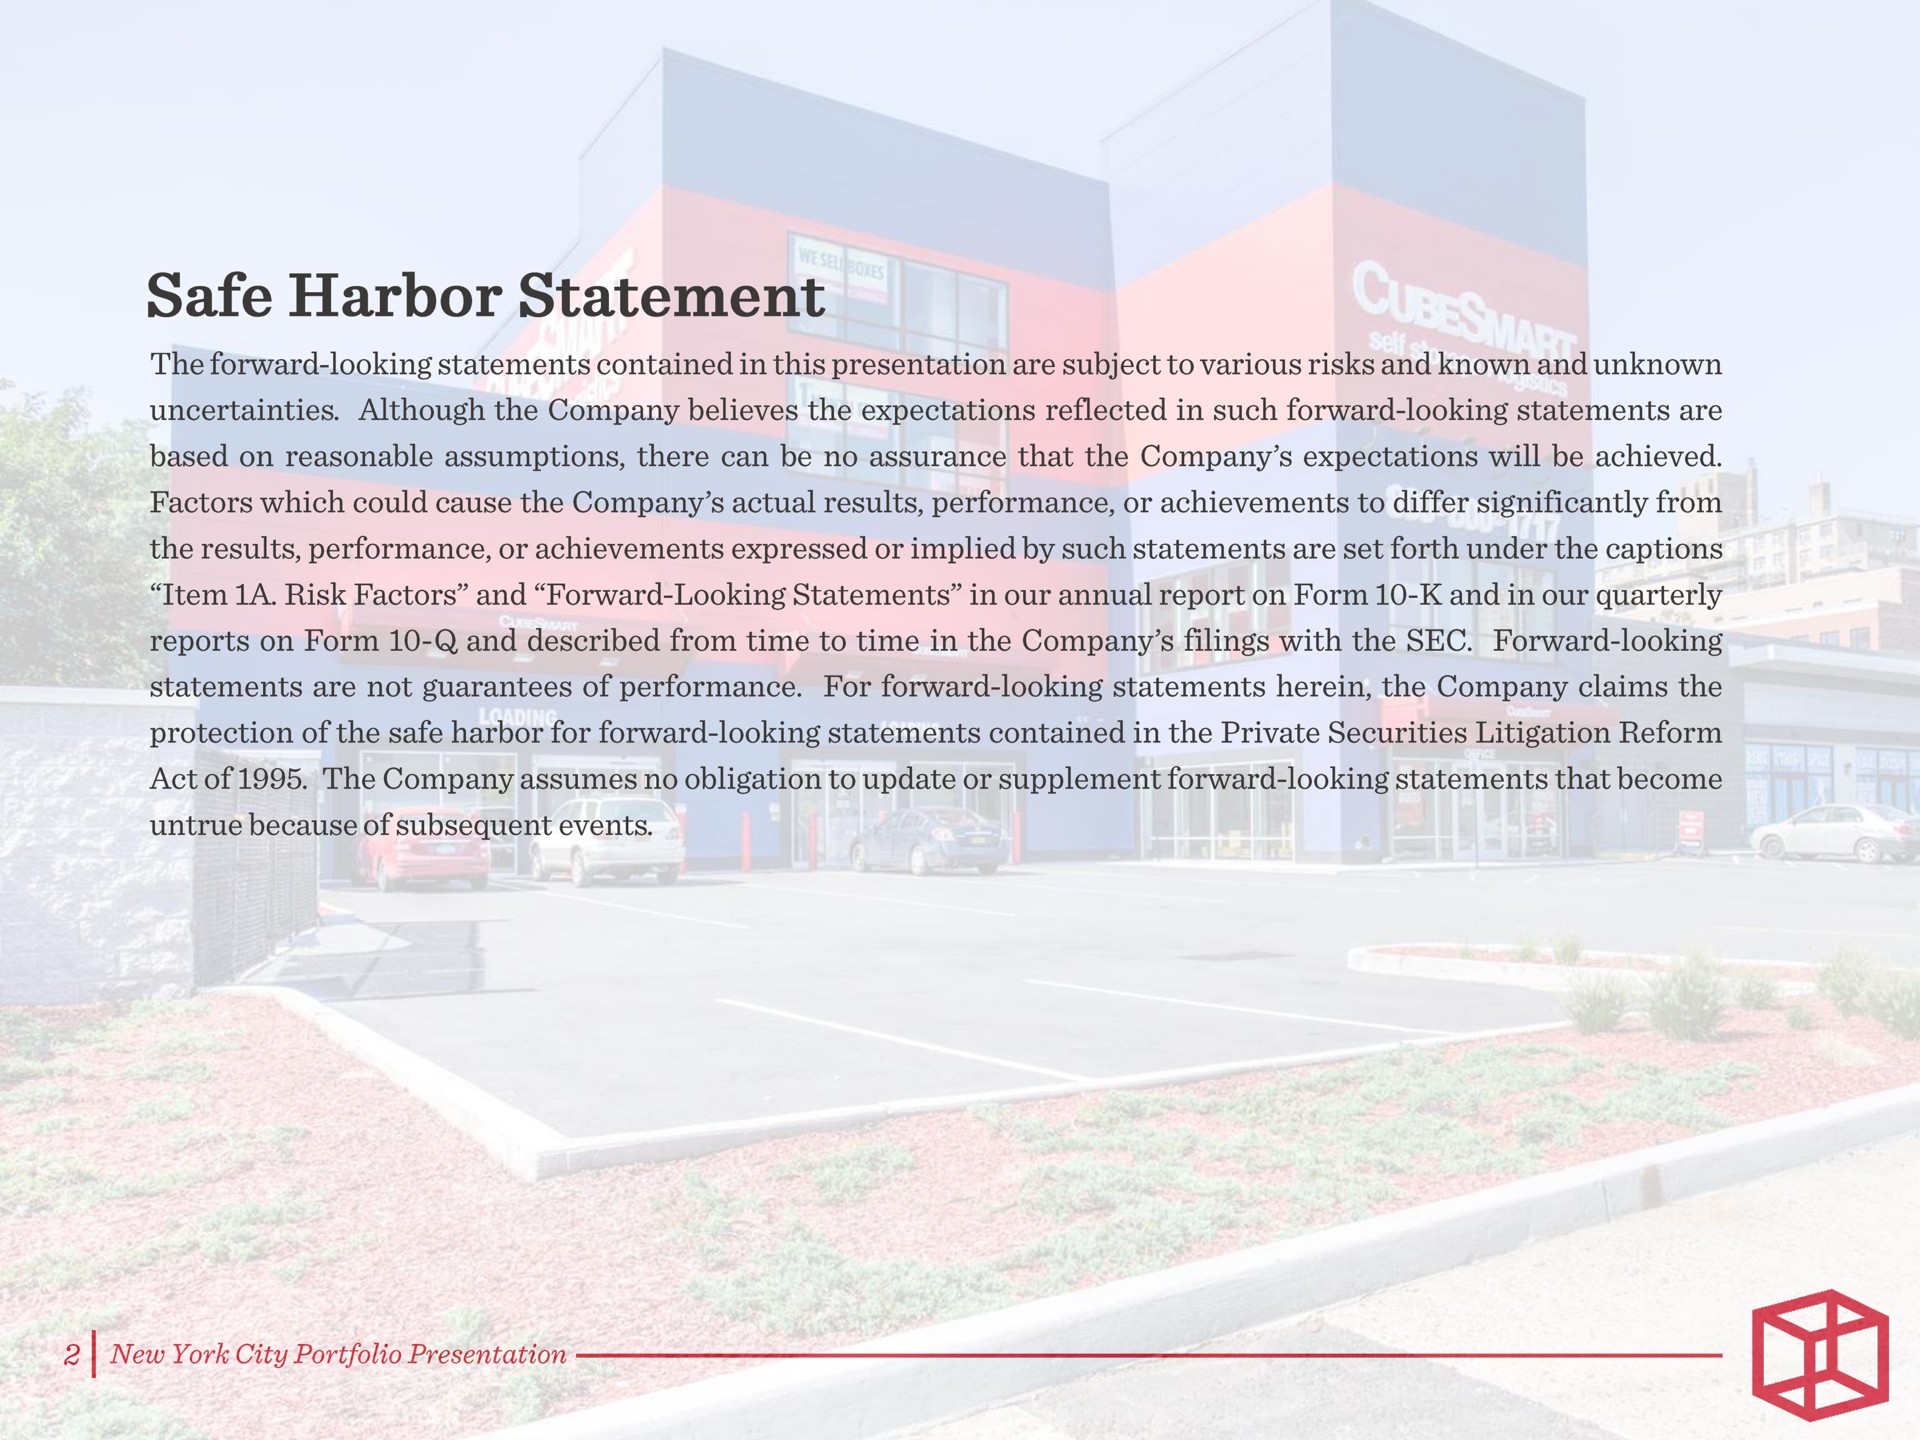 safe harbor statement | CubeSmart